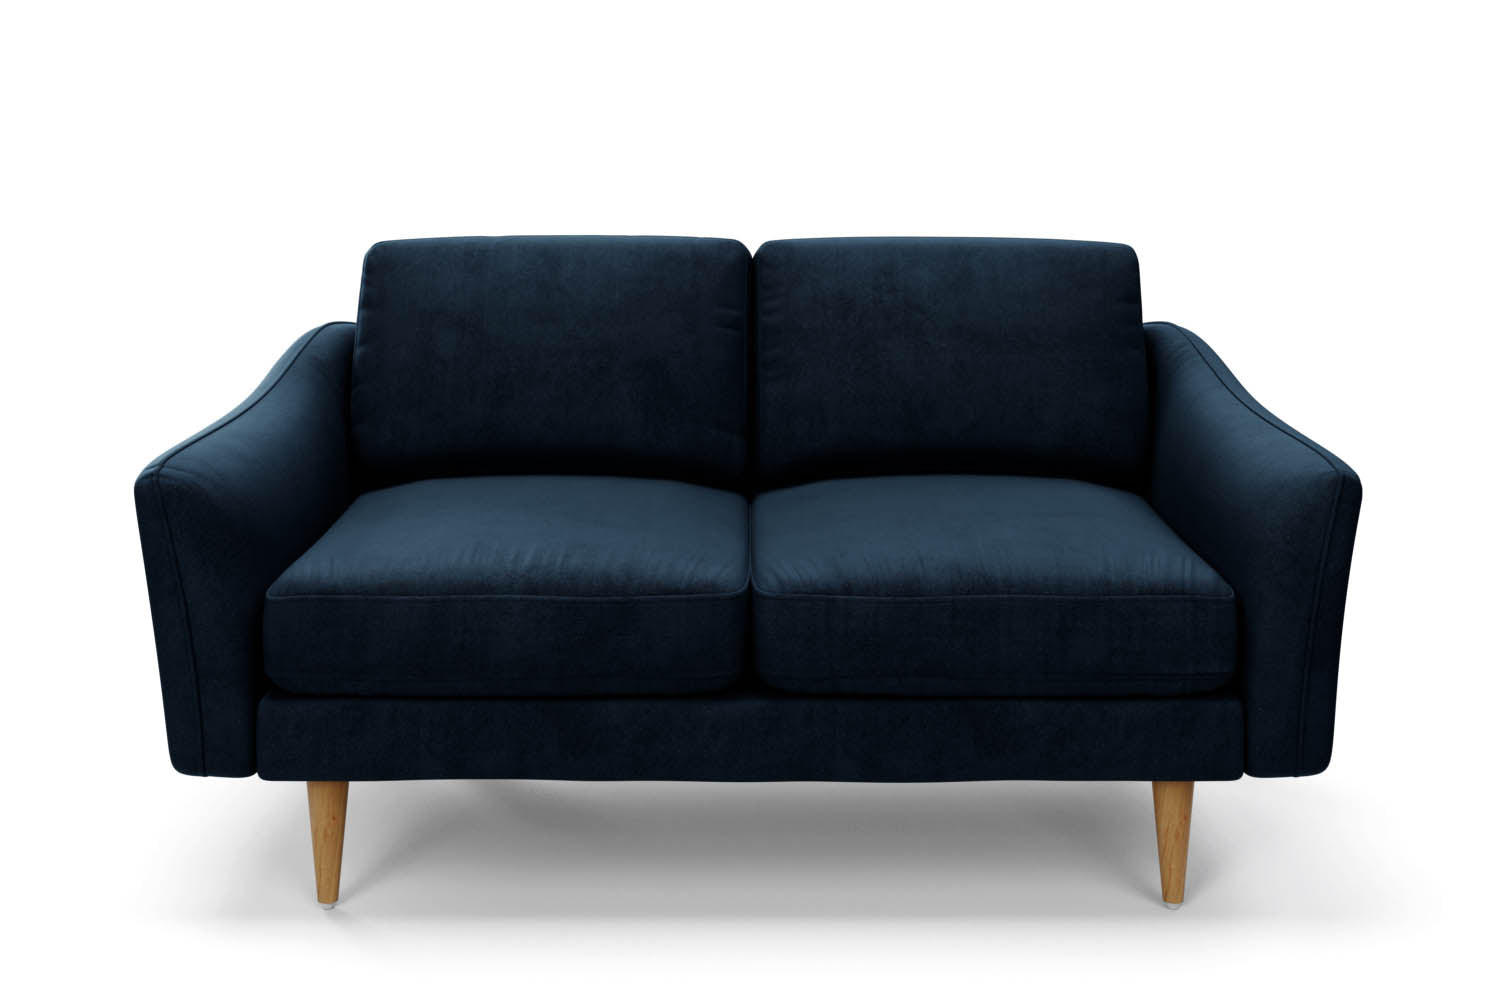 SNUG | The Rebel 2 Seater Sofa in Deep Blue variant_40837173215280